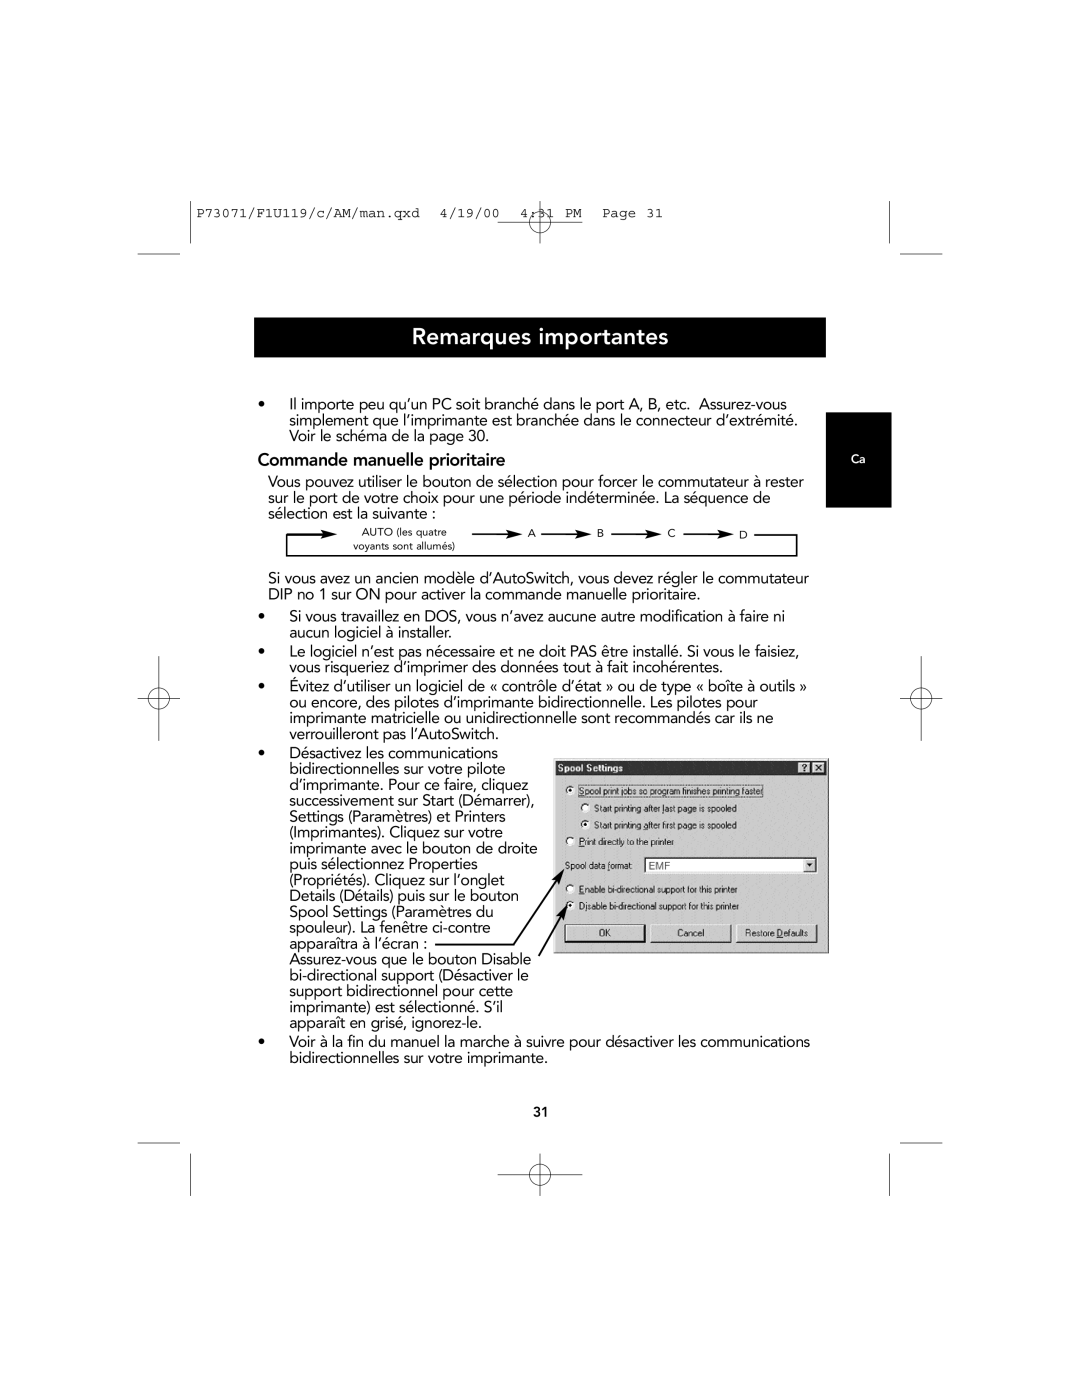 Belkin F1U119 user manual Remarques importantes, Commande manuelle prioritaire 